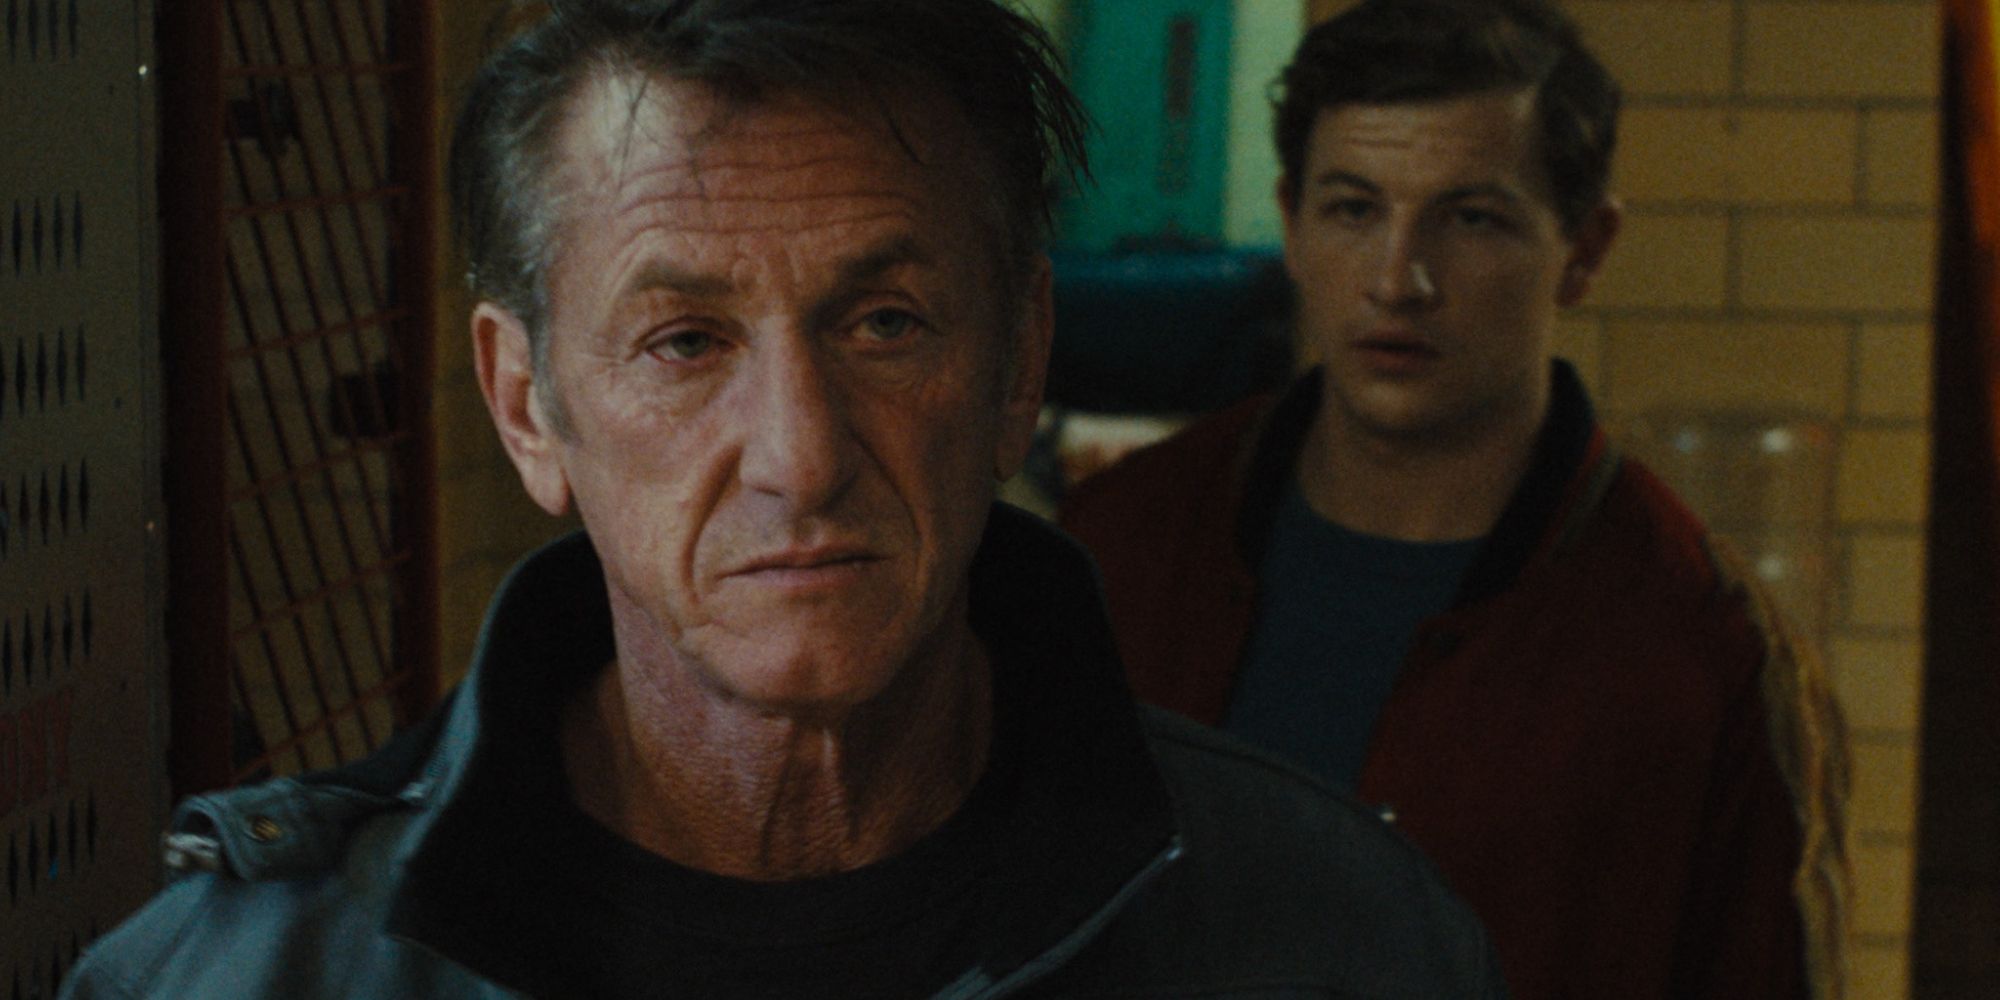 Asphalt City Review: Sean Penn & Tye Sheridan’s Chemistry Carries Gritty, Uneven Thriller